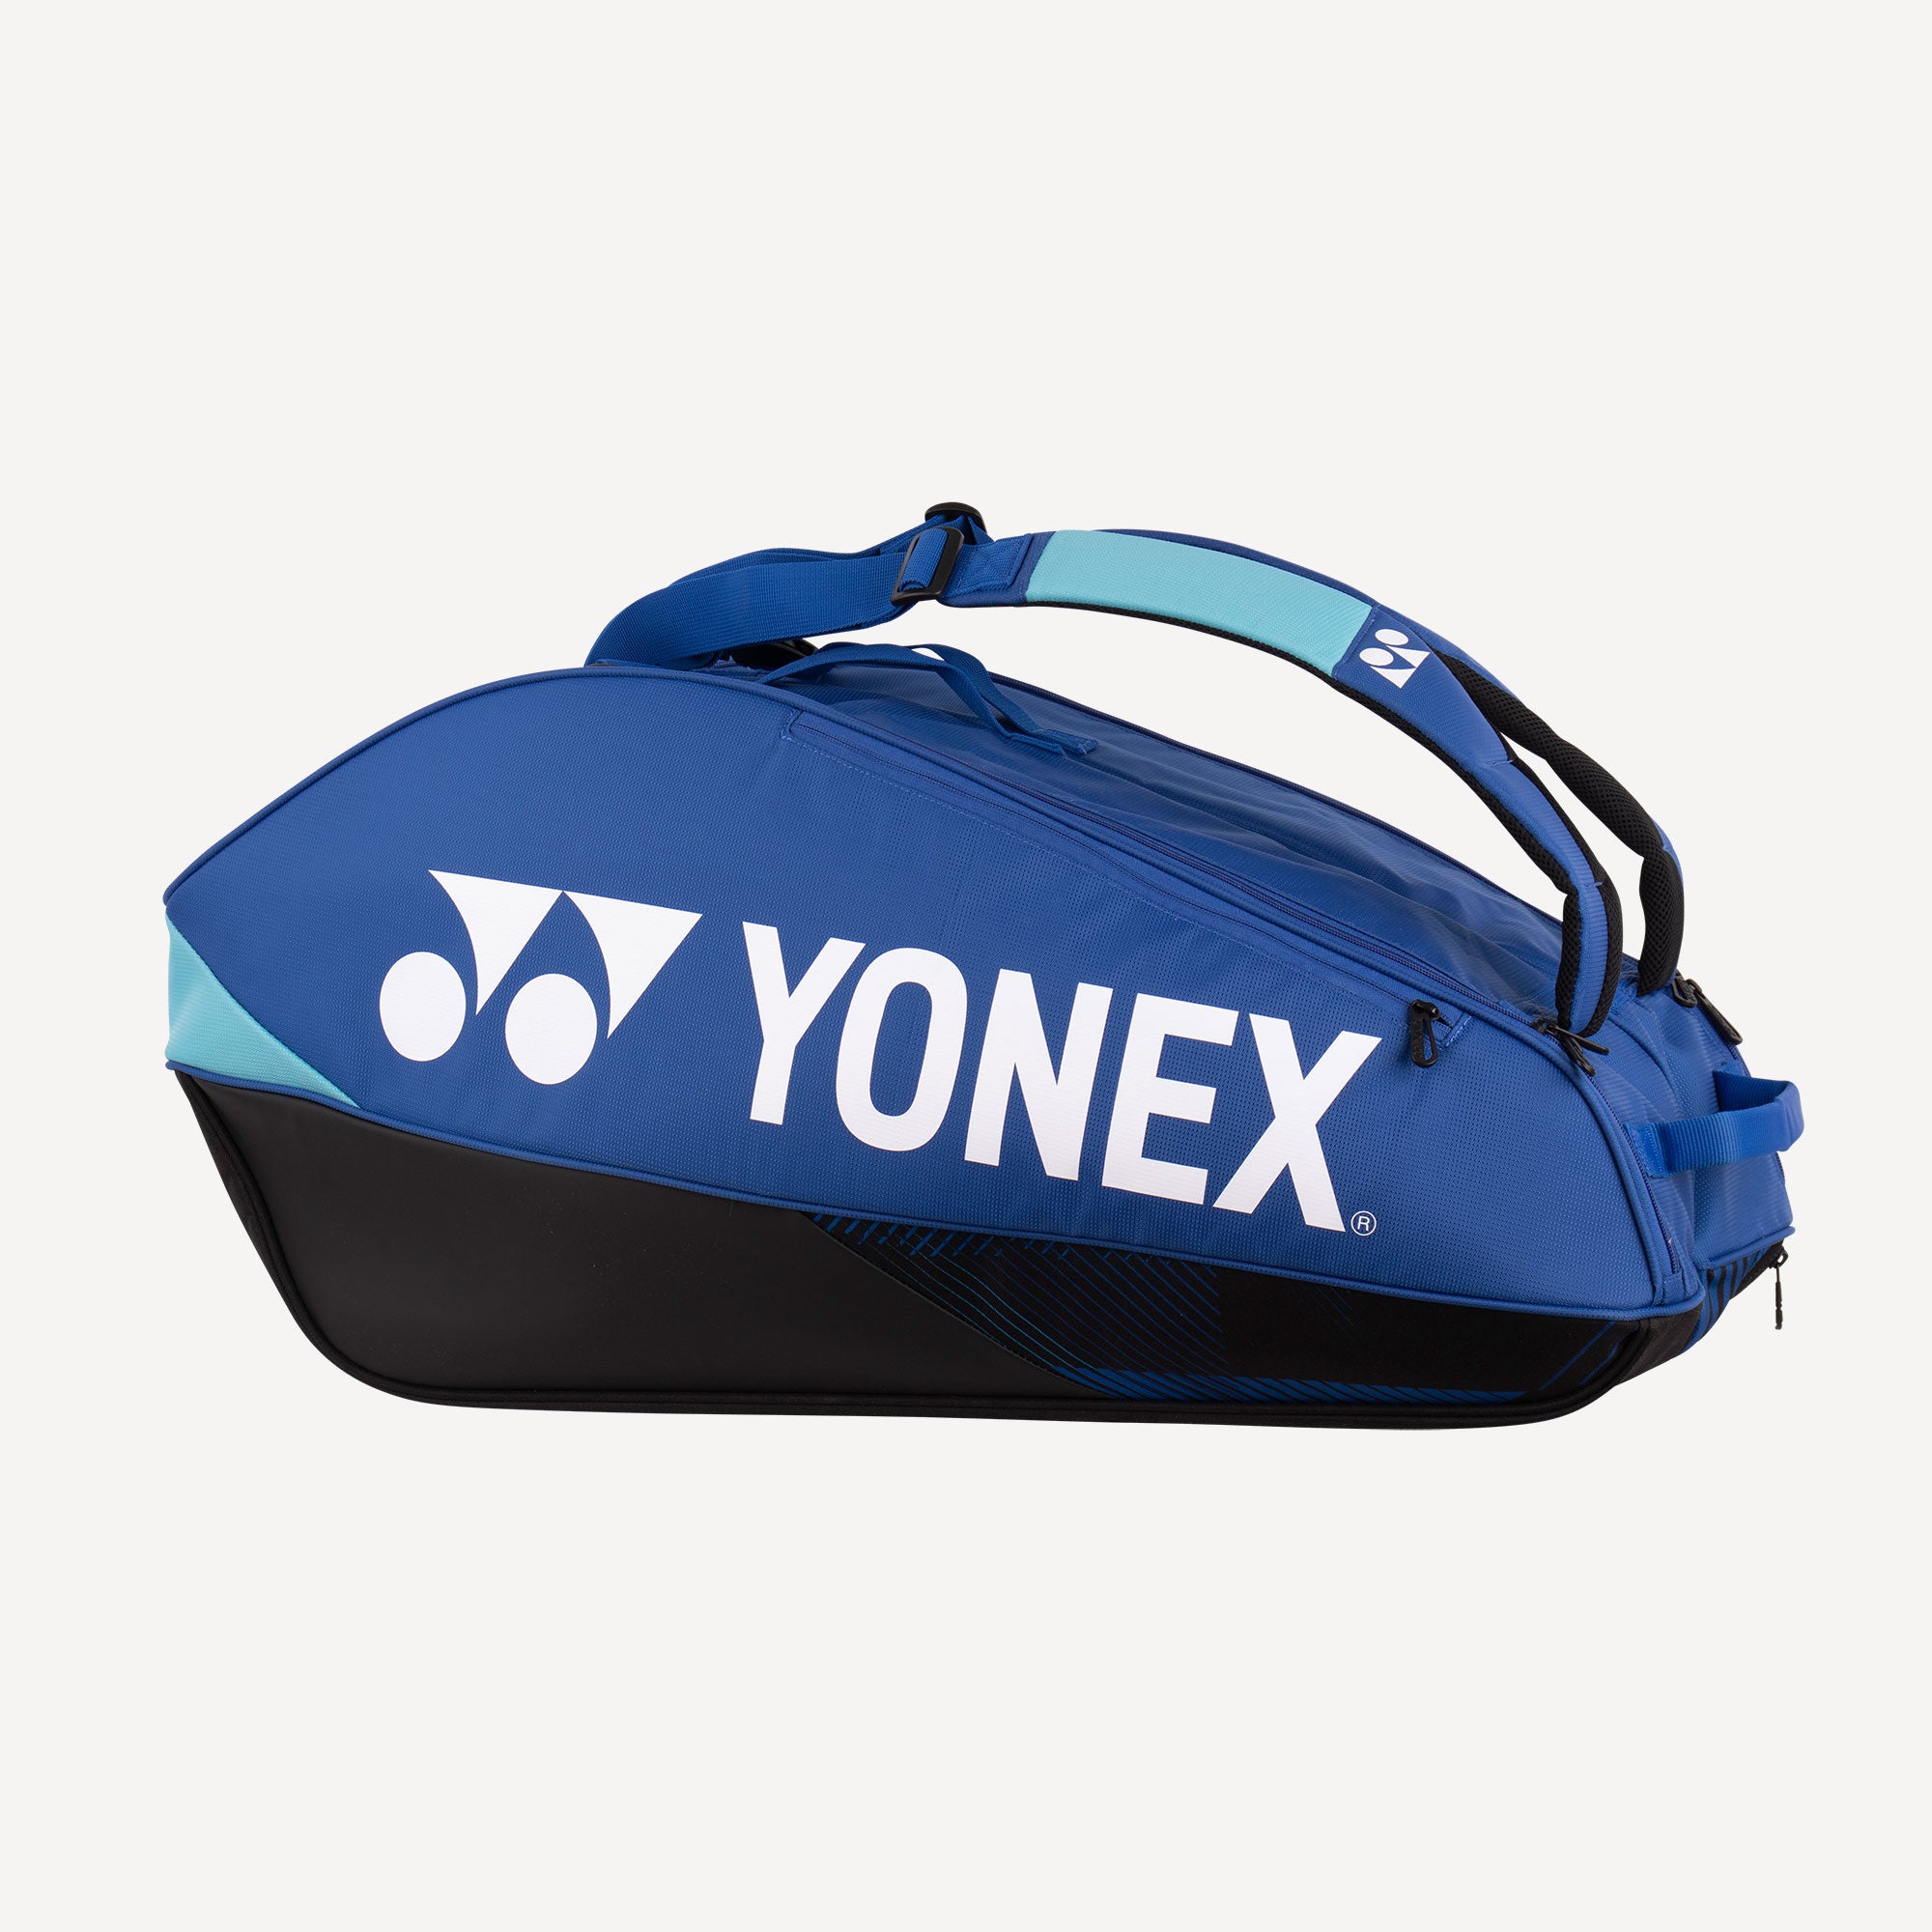 Yonex Pro 6 Racket Tennis Bag - Blue (2)